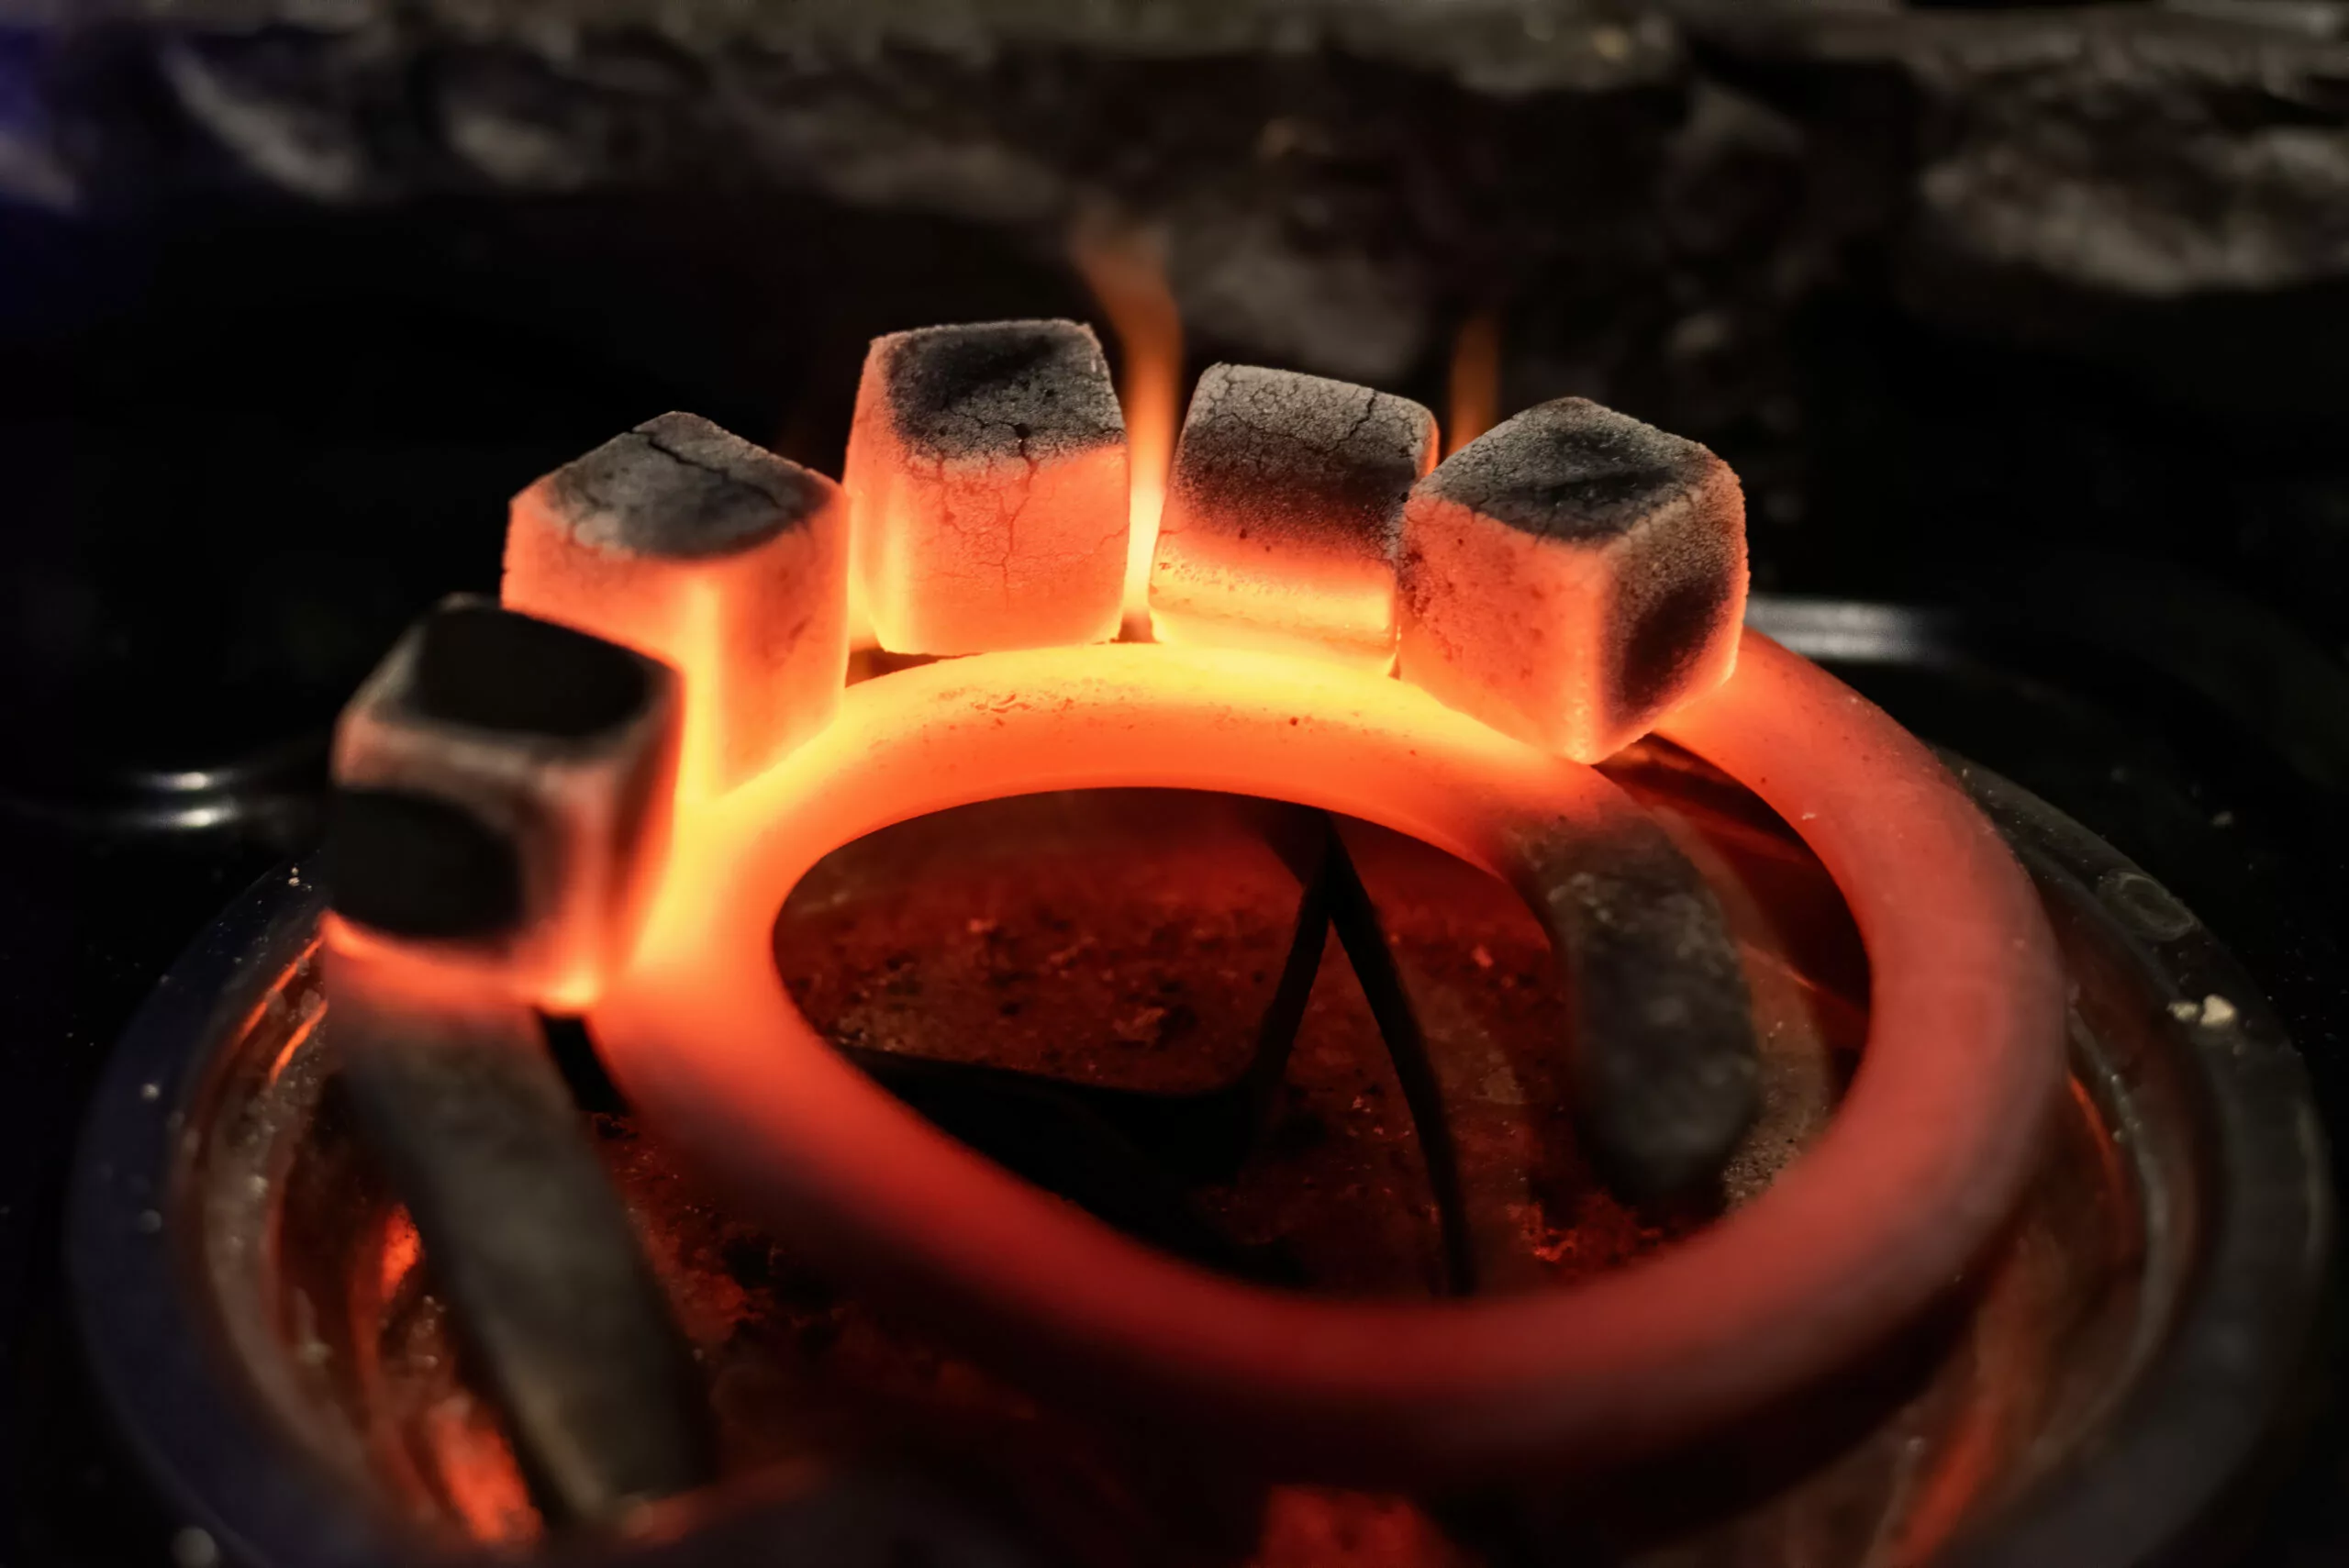 Five coals heating on a hookah stove